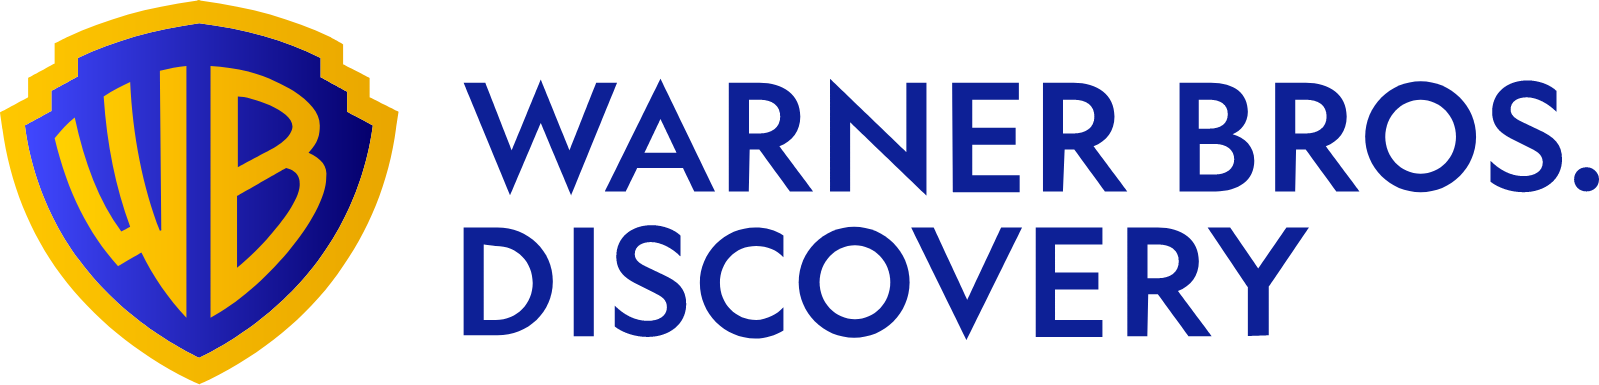 Warner Bros. Discovery logo large (transparent PNG)